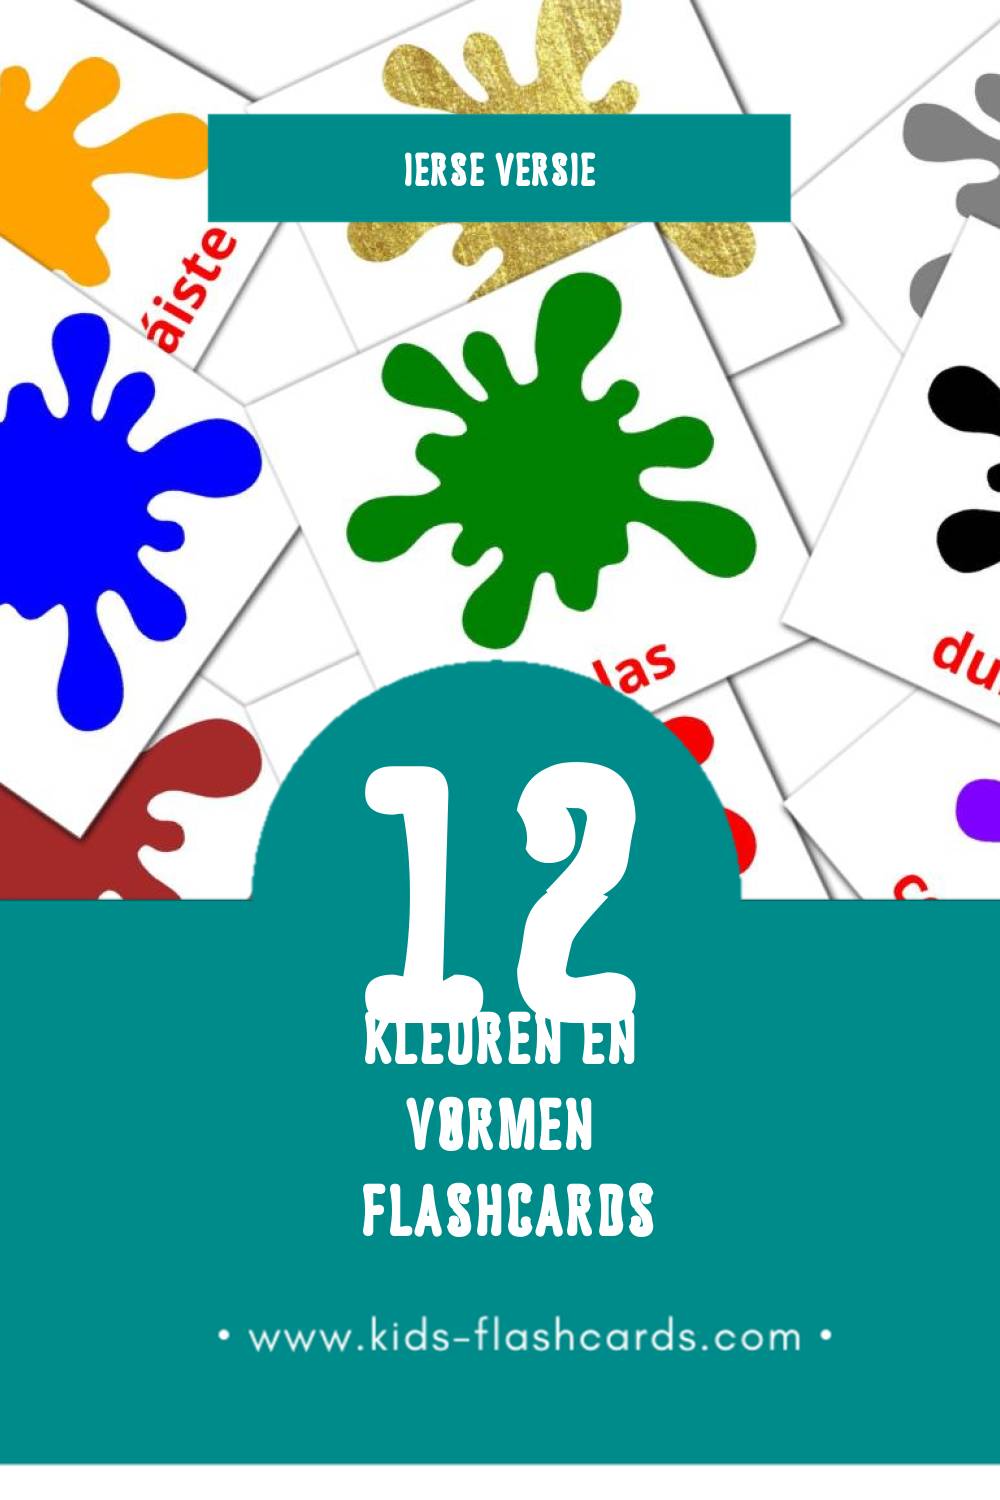 Visuele dathanna agus cruthanna Flashcards voor Kleuters (12 kaarten in het Iers)